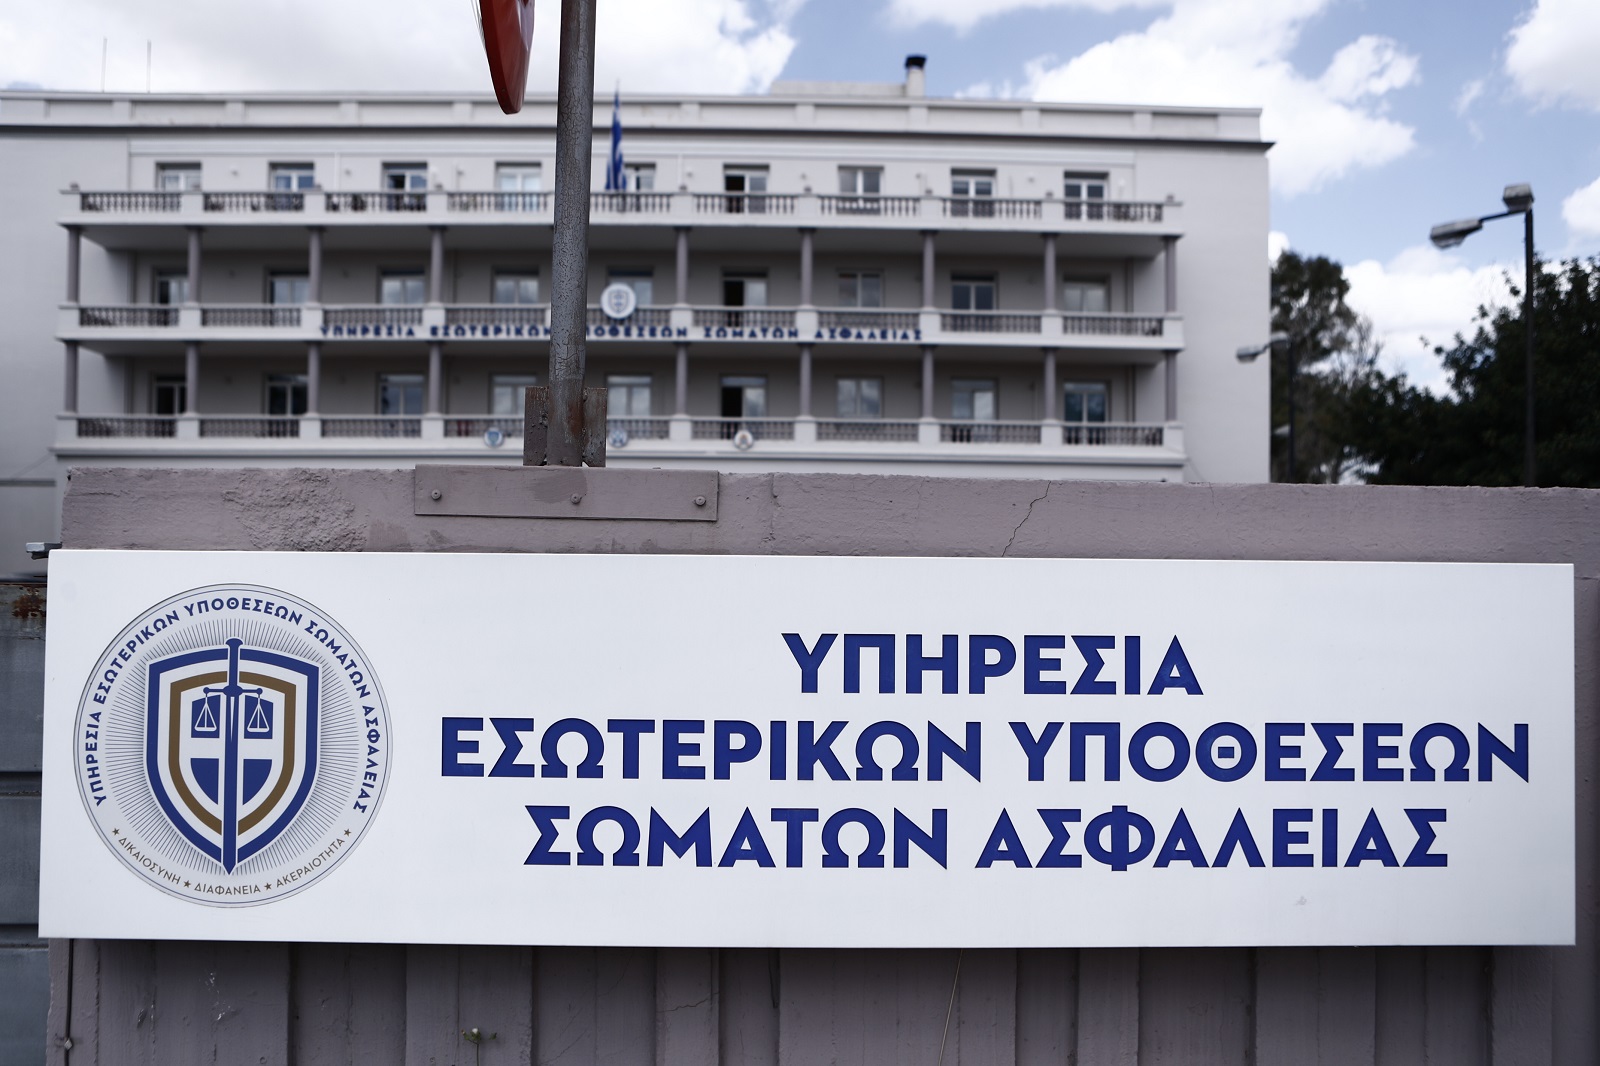 H Διεύθυνση Εσωτερικών Υποθέσεων της Ελληνικής Αστυνομίας, όπου είχε κληθεί για κατάθεση η μητέρα της 28χρονης, Κυριακής Γρίβα